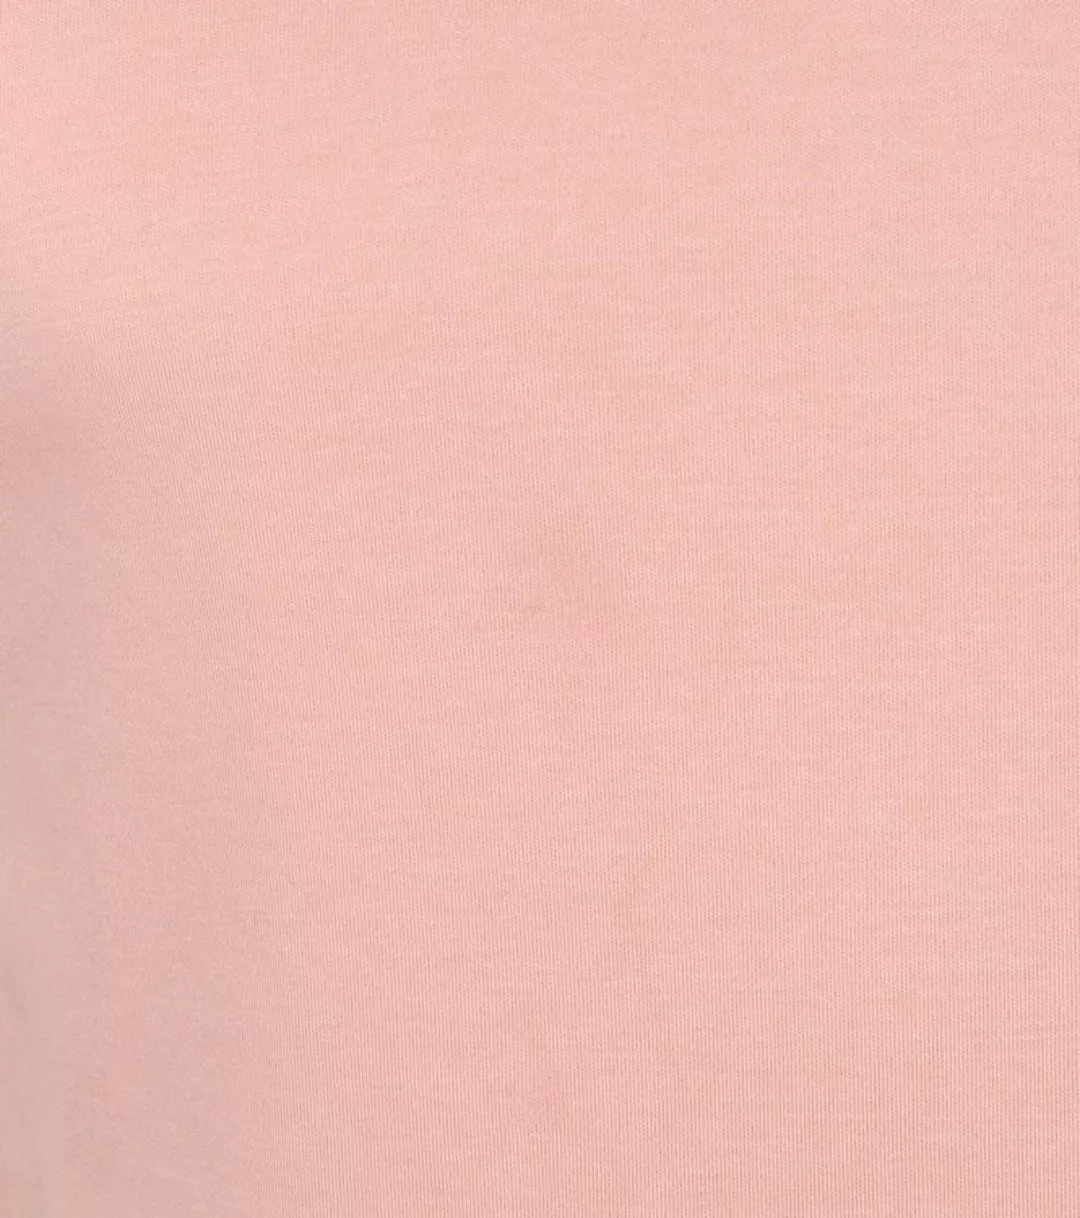 Suitable Sorona Polo Shirt Pinke - Größe 3XL günstig online kaufen